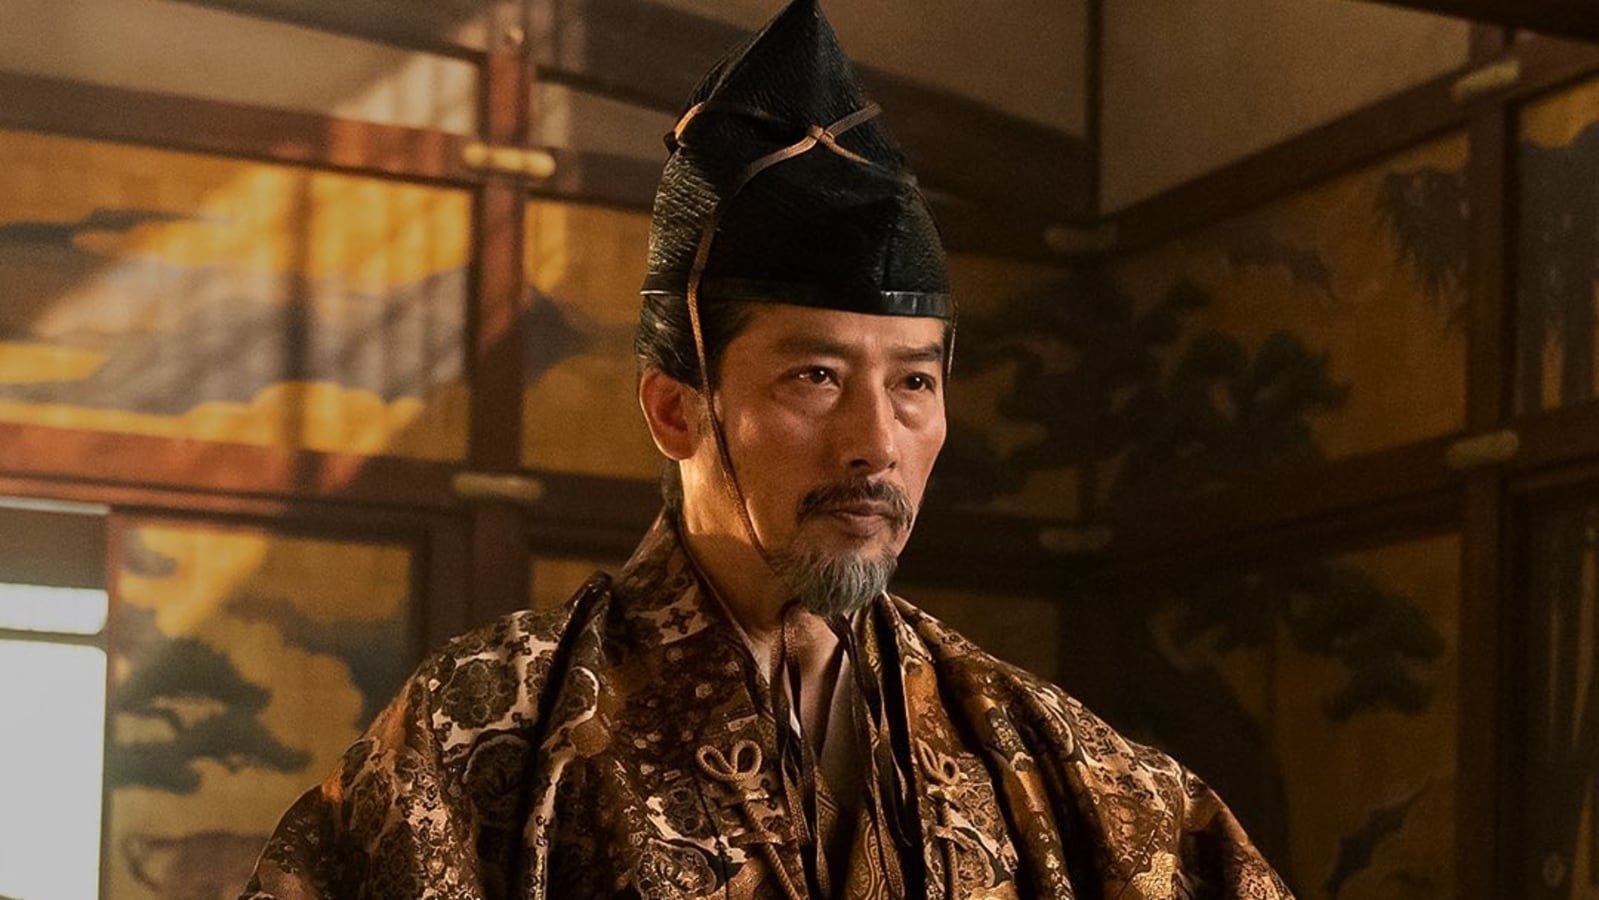 FX Shogun hailed ‘prestige TV’: Here's when Episode 3 will come out